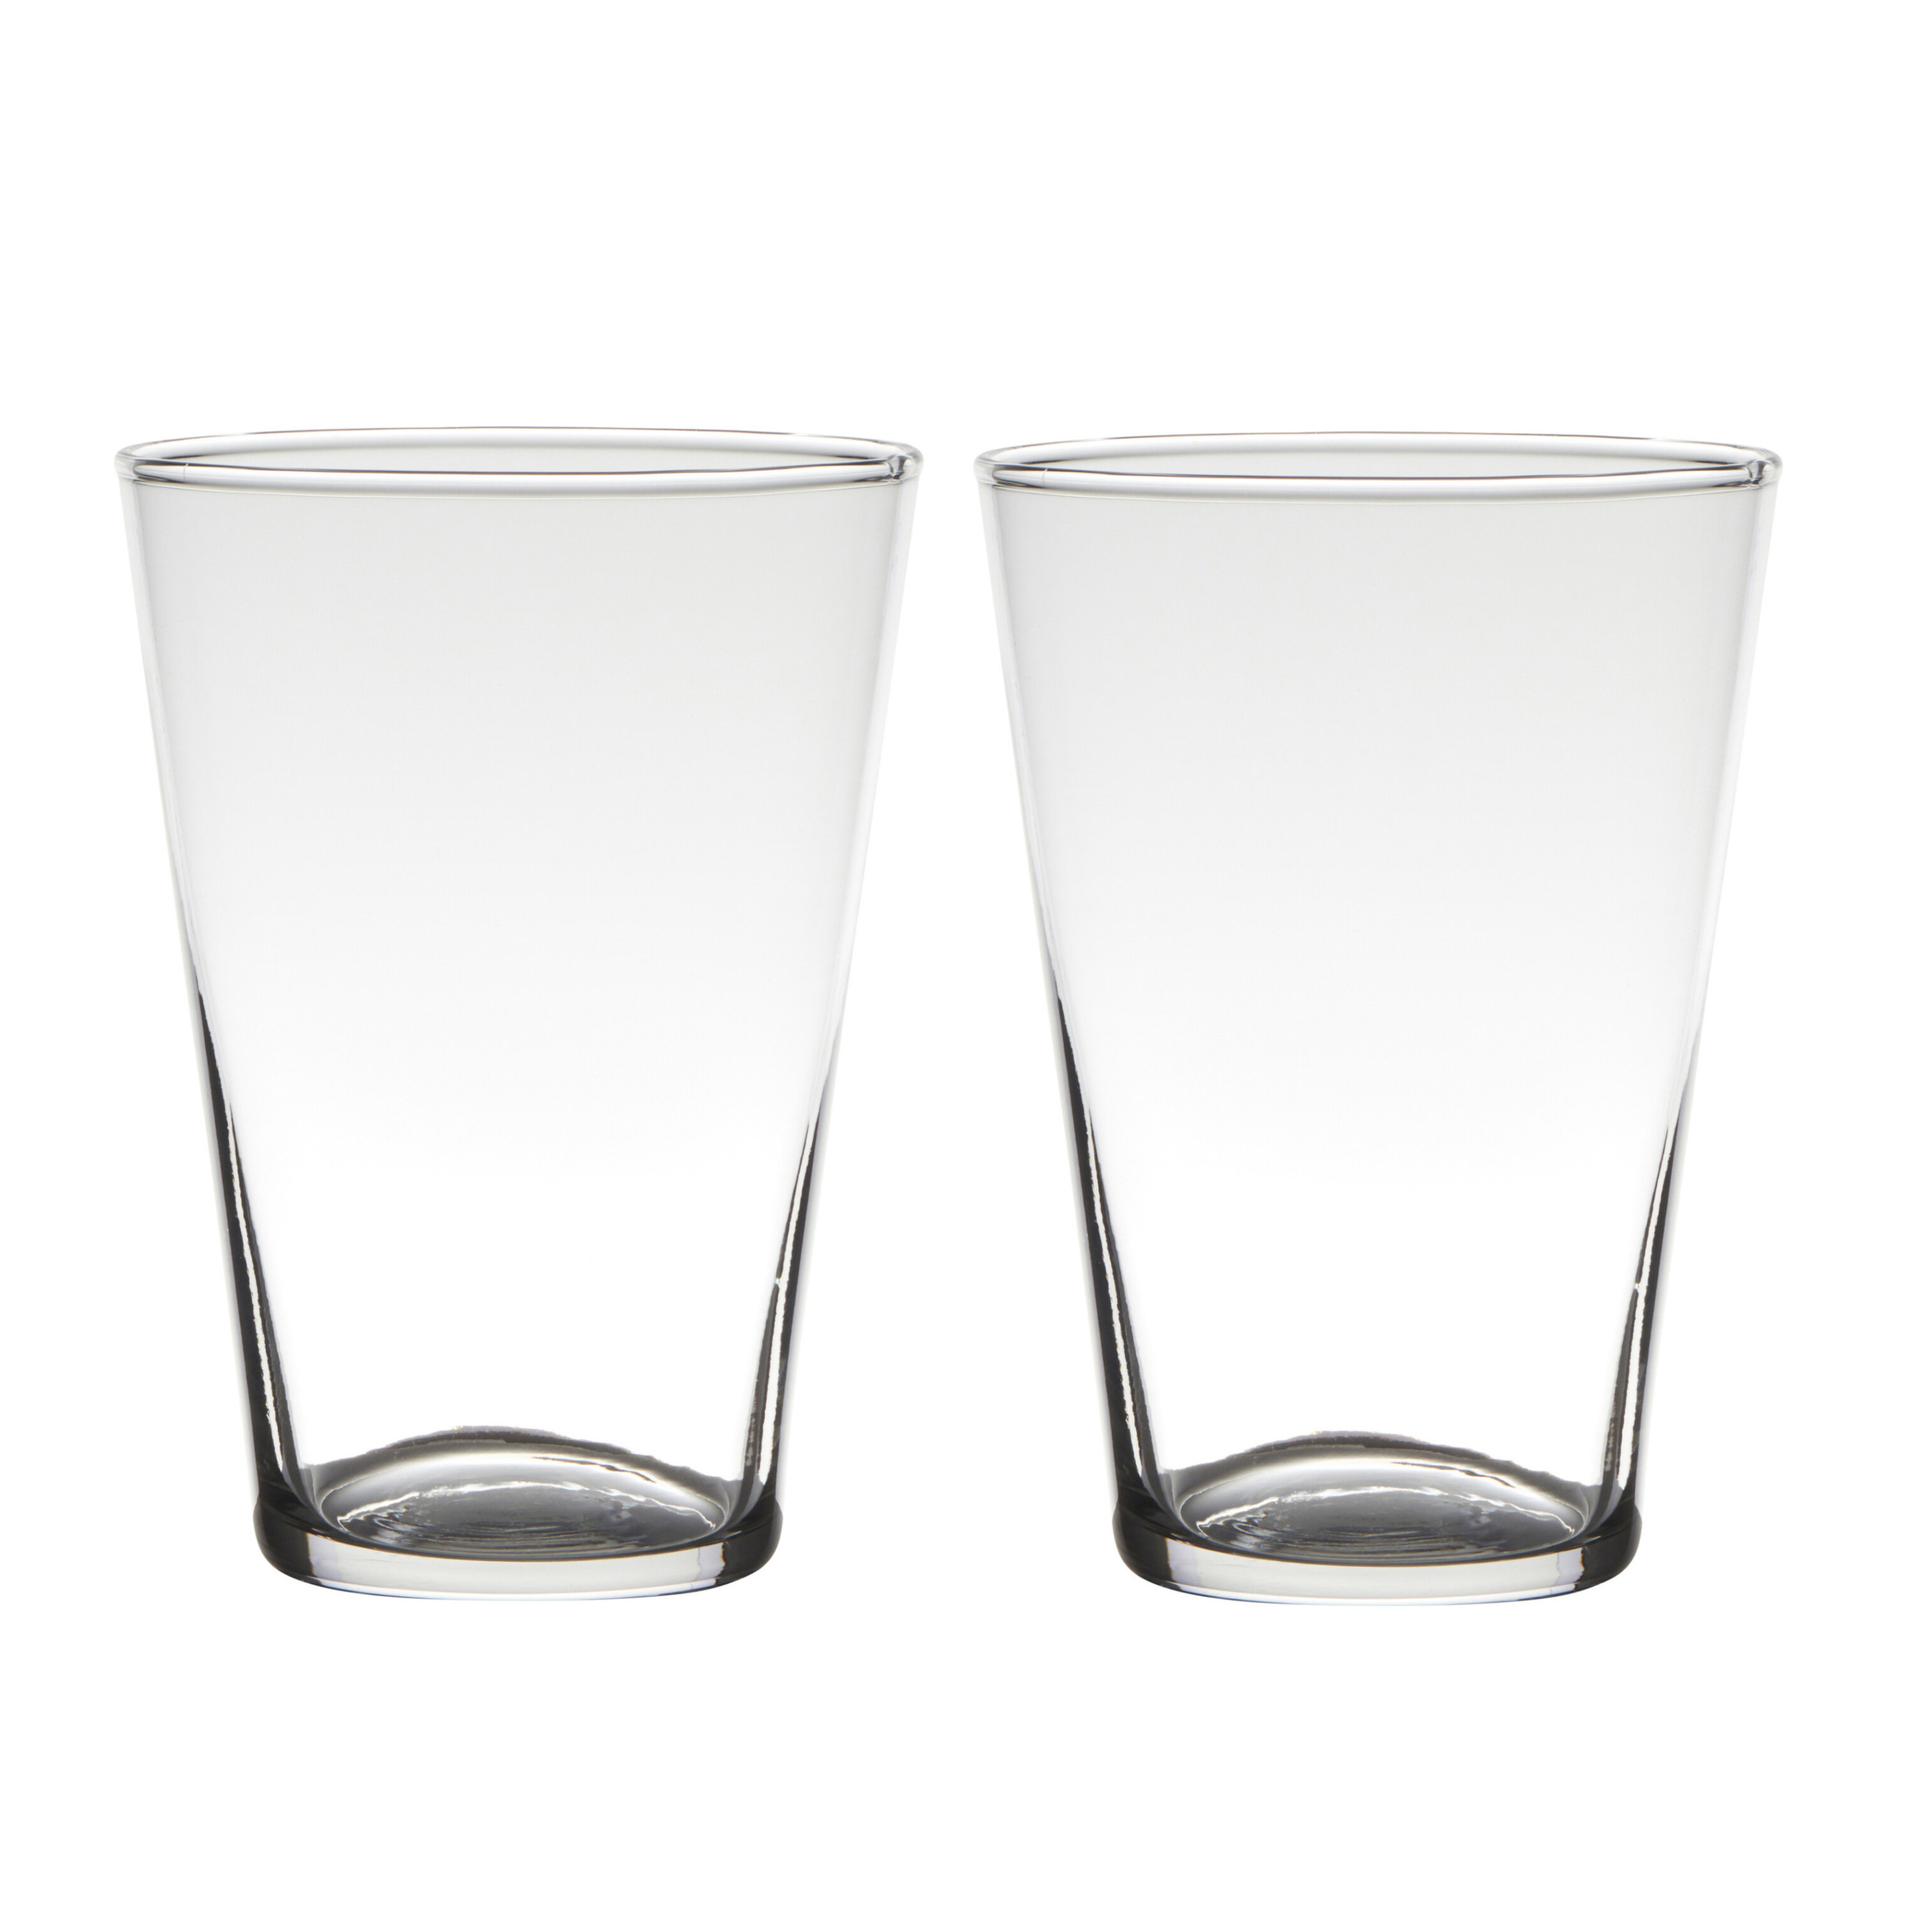 Merkloos Set van 2x stuks transparante home-basics conische vaas/vazen van glas 20 x 14 cm -